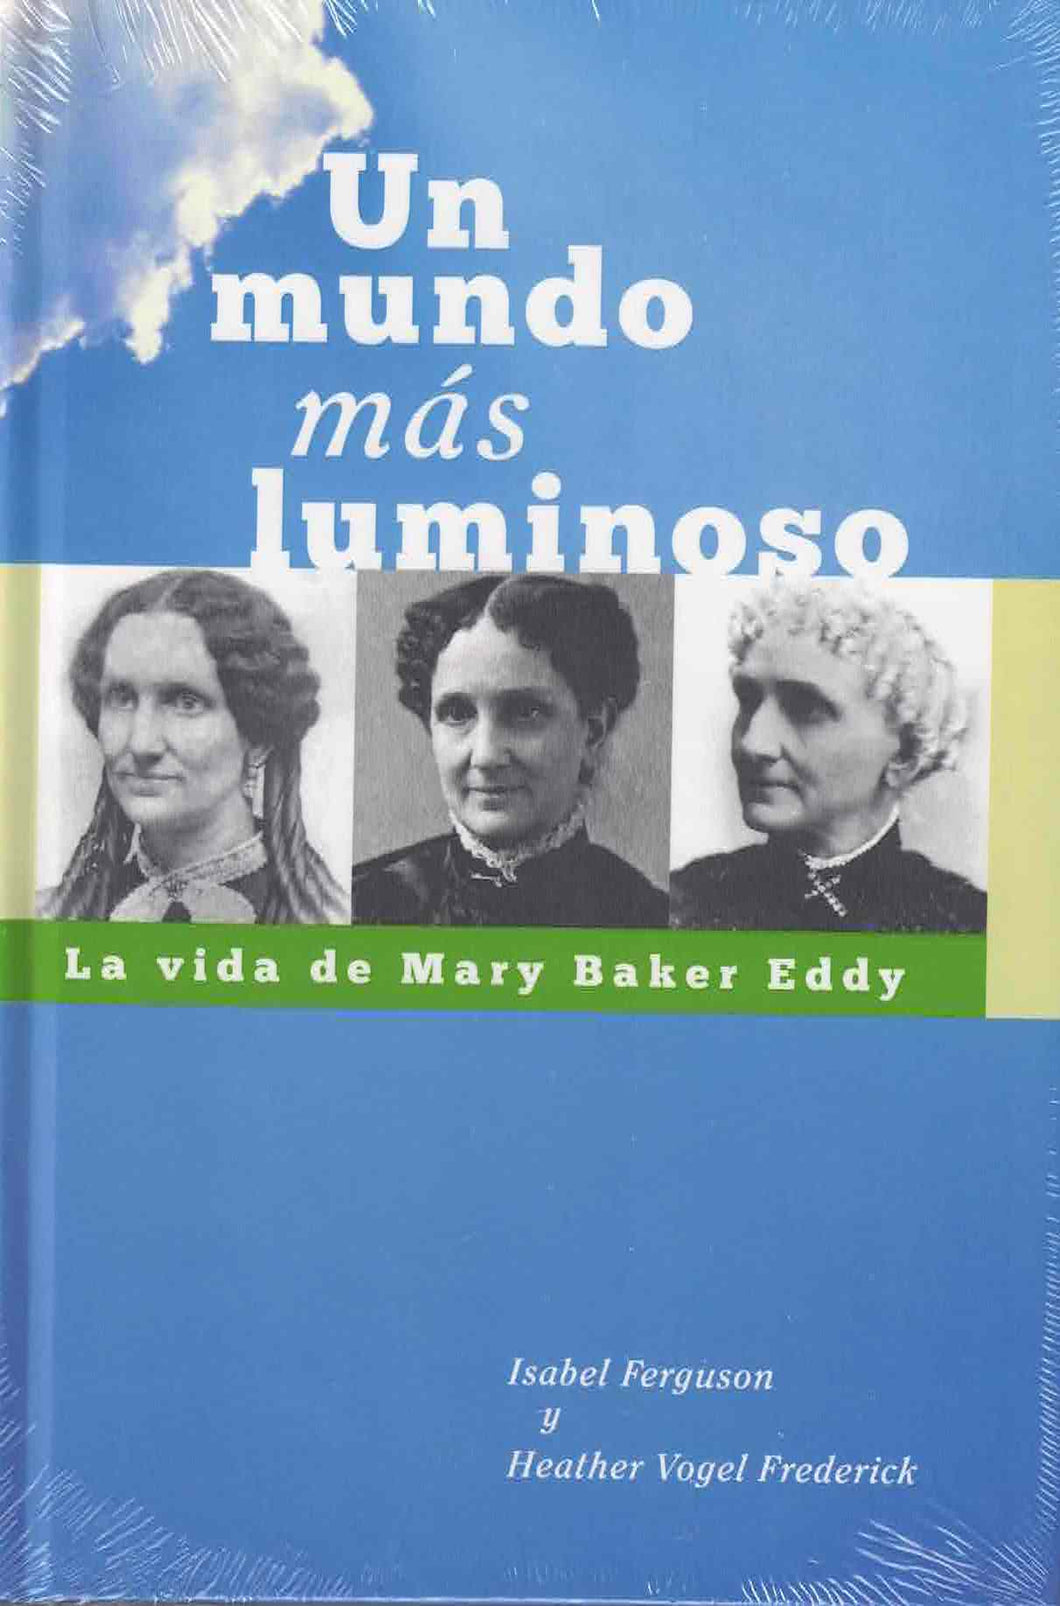 Un mundo mas luminoso: La vida de Mary Baker Eddy